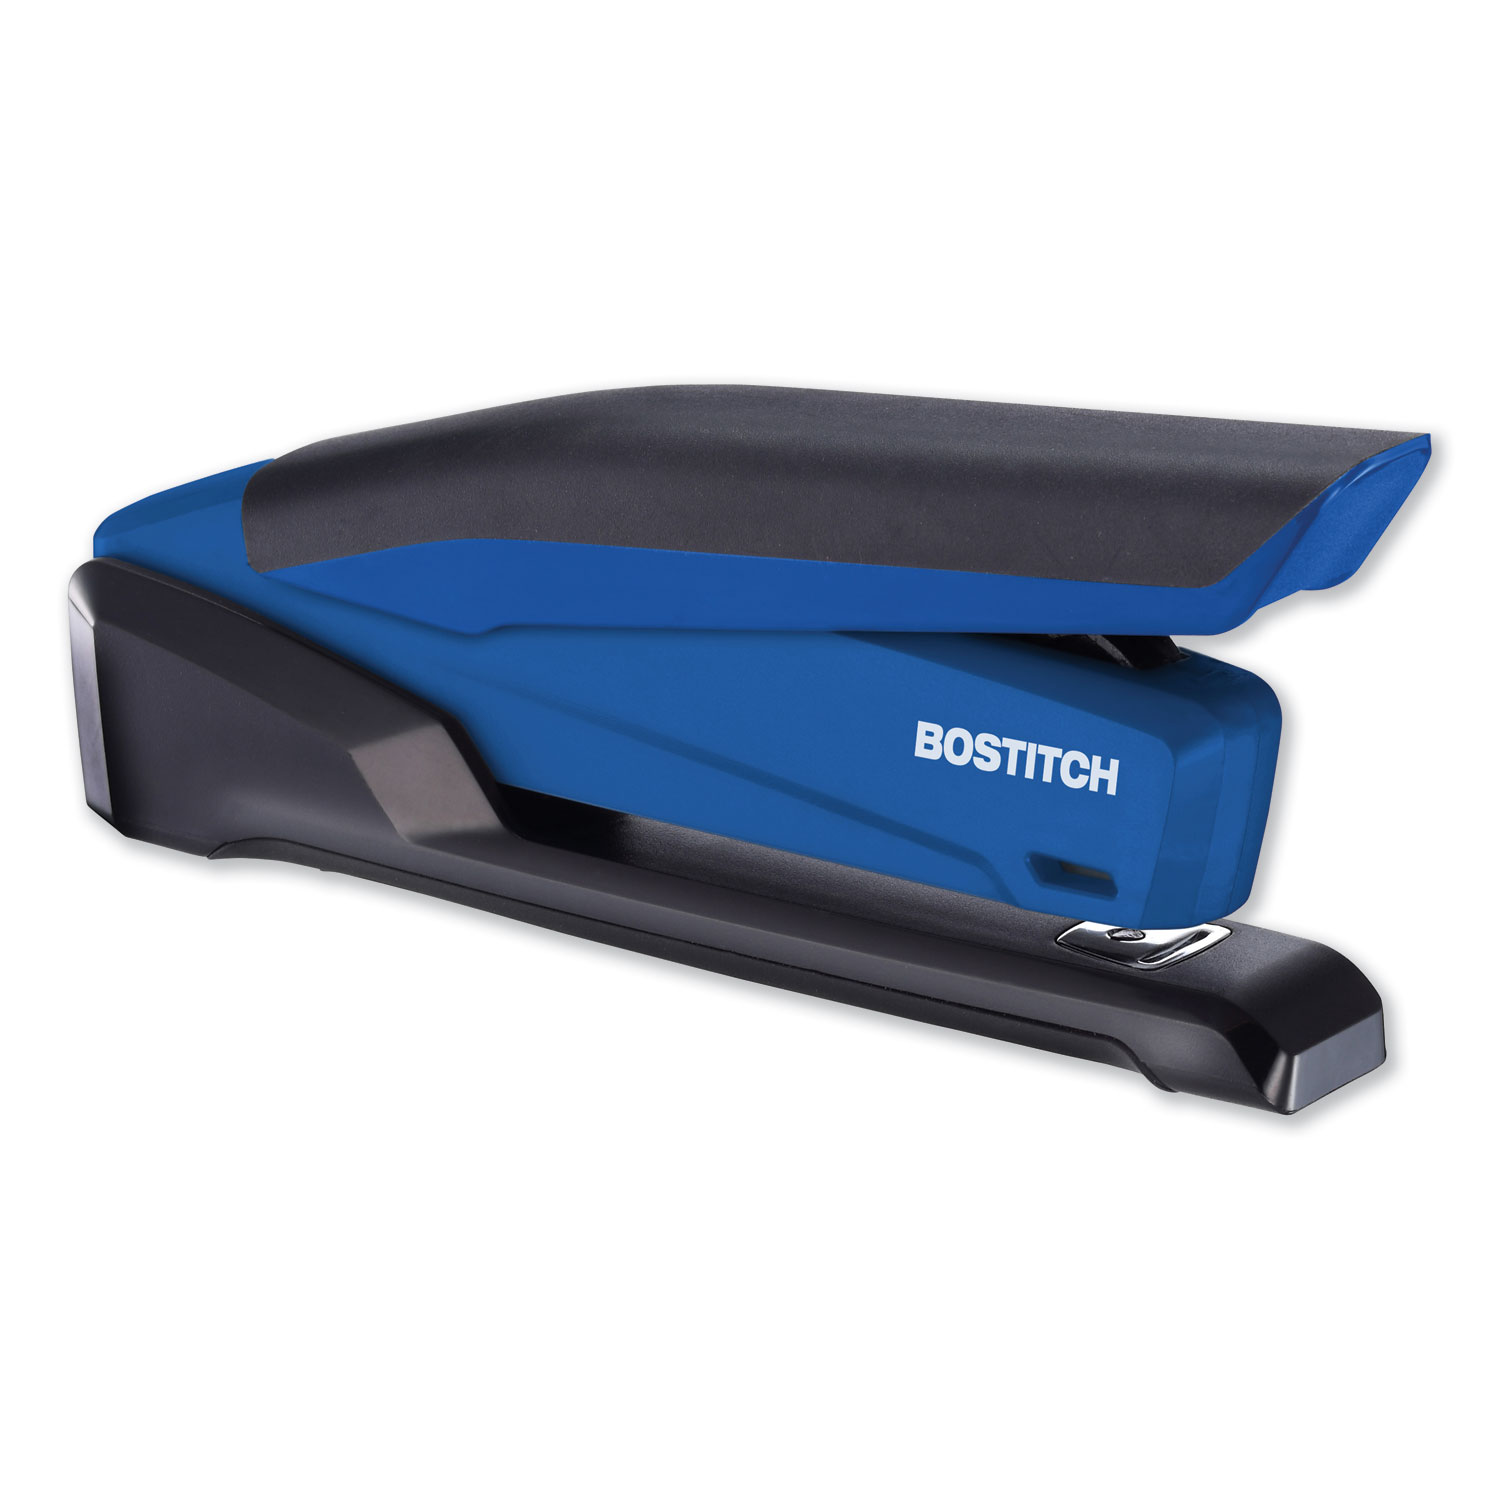  Bostitch 1122 InPower Spring-Powered Desktop Stapler, 20-Sheet Capacity, Blue (ACI1122) 